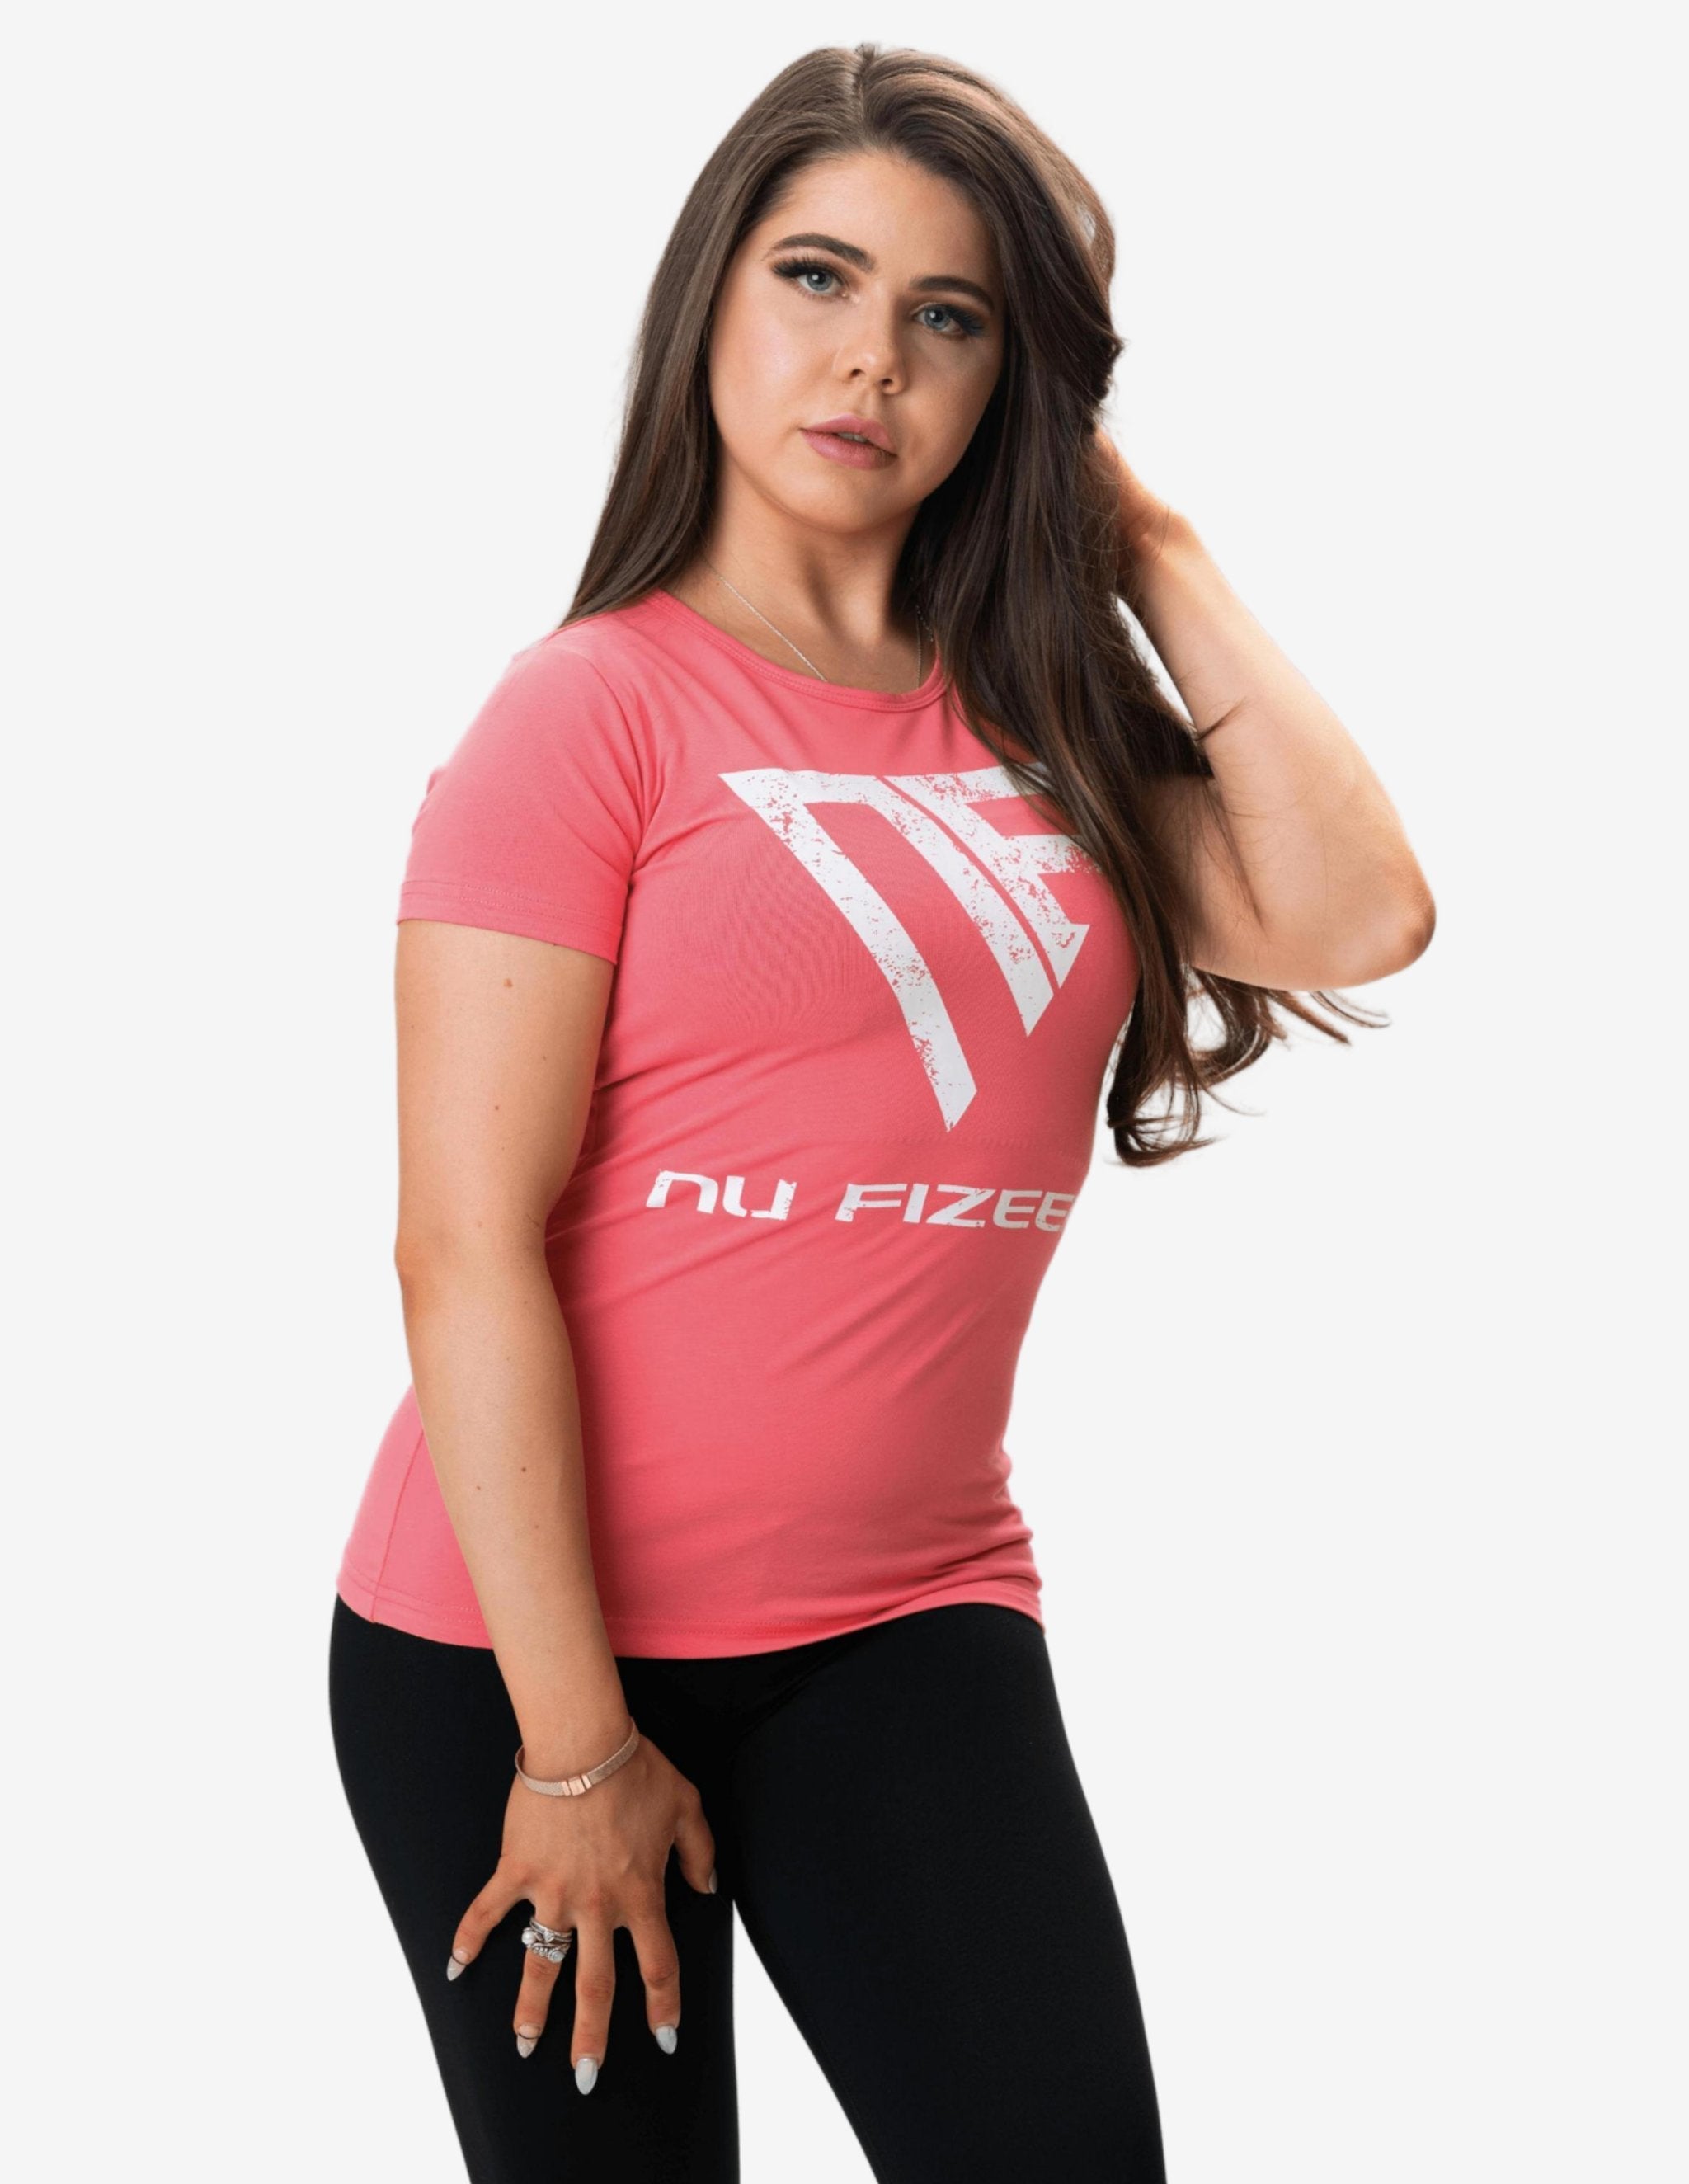 NU ATTITUDE TEE PINK-T-shirt Woman-NU FIZEEK-Guru Muscle